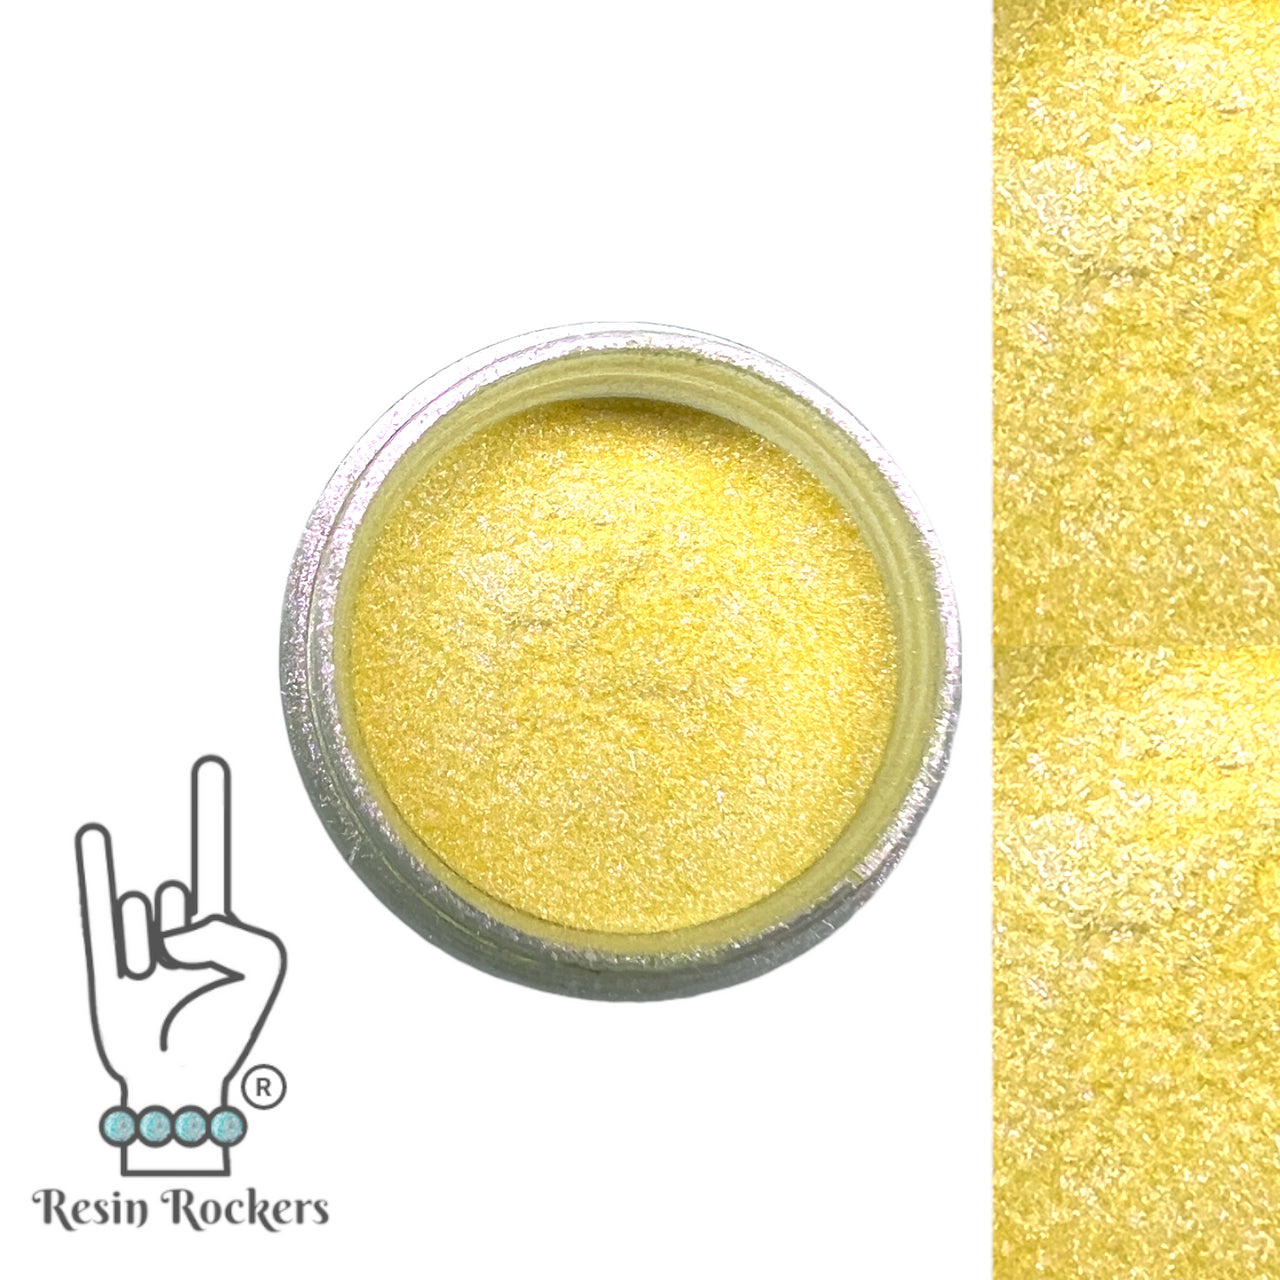 Resin Rockers Premium Color-shift Chameleon Pigment Powder Ultra Shine Sunflower